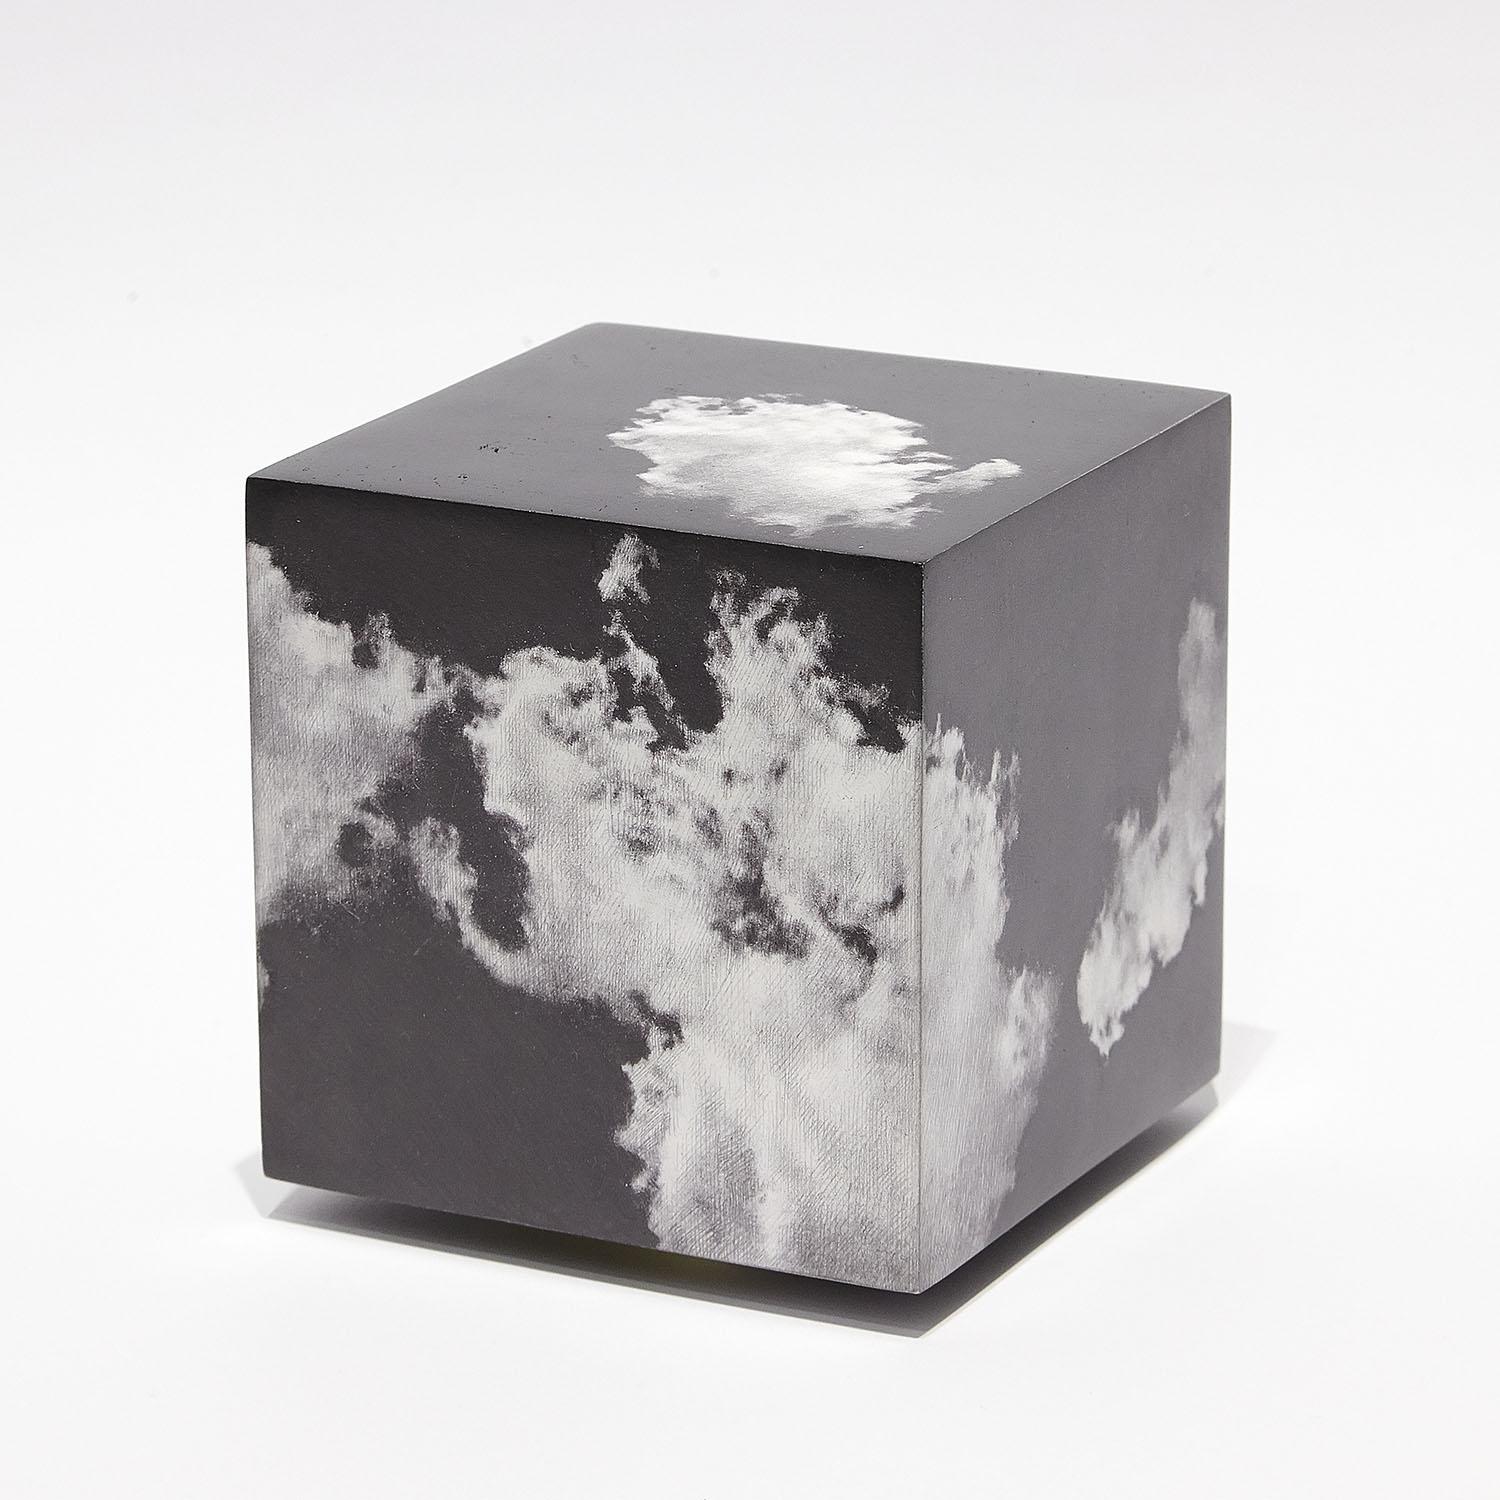 10 cm cubi di cielo - Conceptual Sculpture by Elvio Chiricozzi